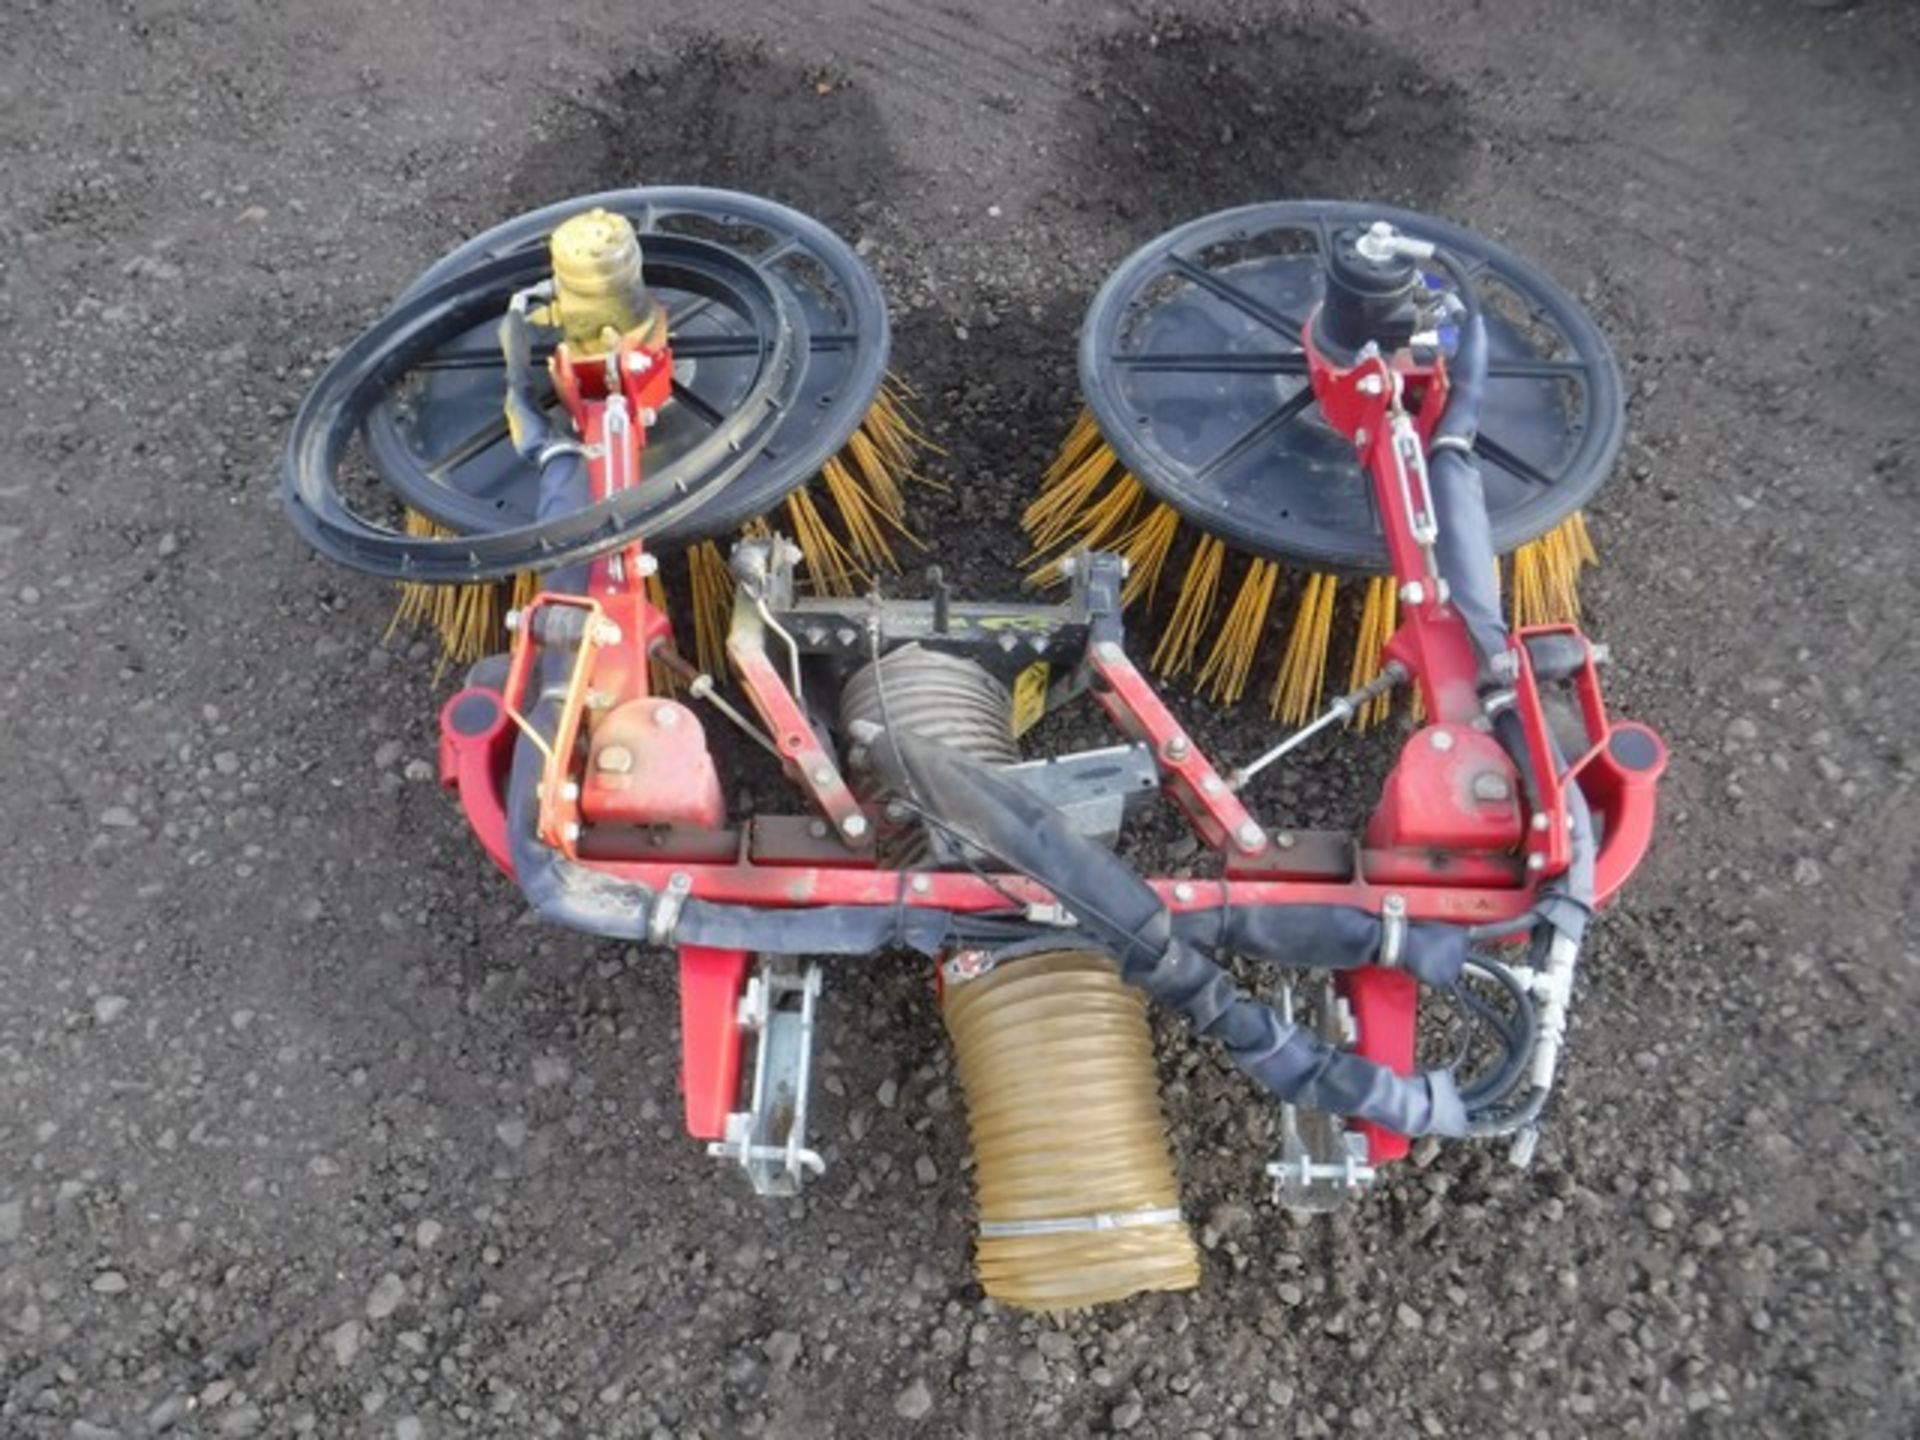 2015 LINAK sweeper attachment for Ferrari mower - Bild 2 aus 3